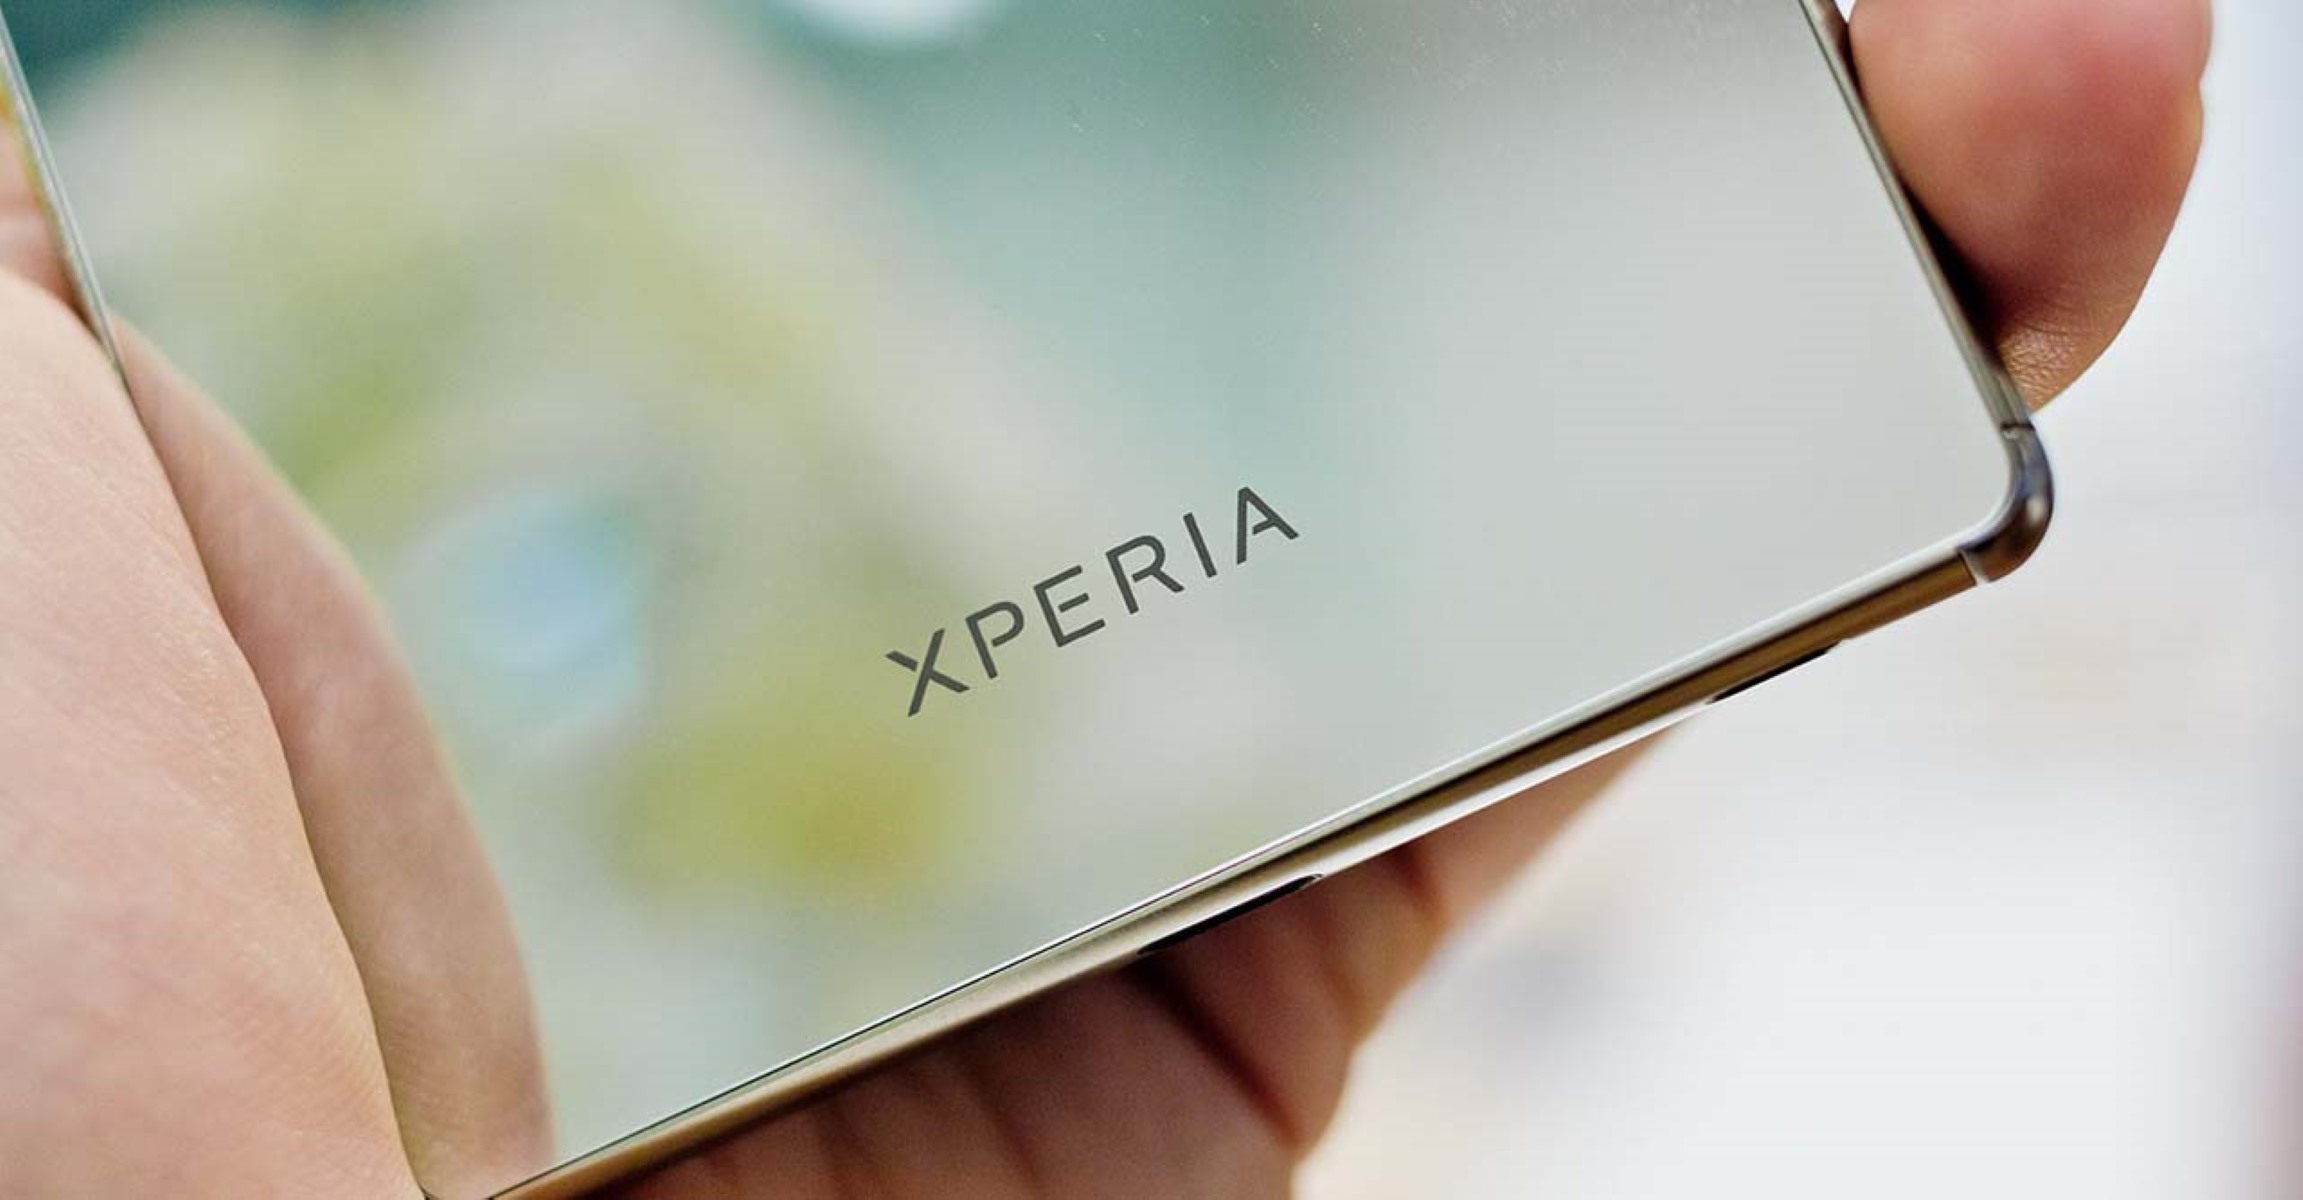 Accessing Xperia Phone: A Quick Guide